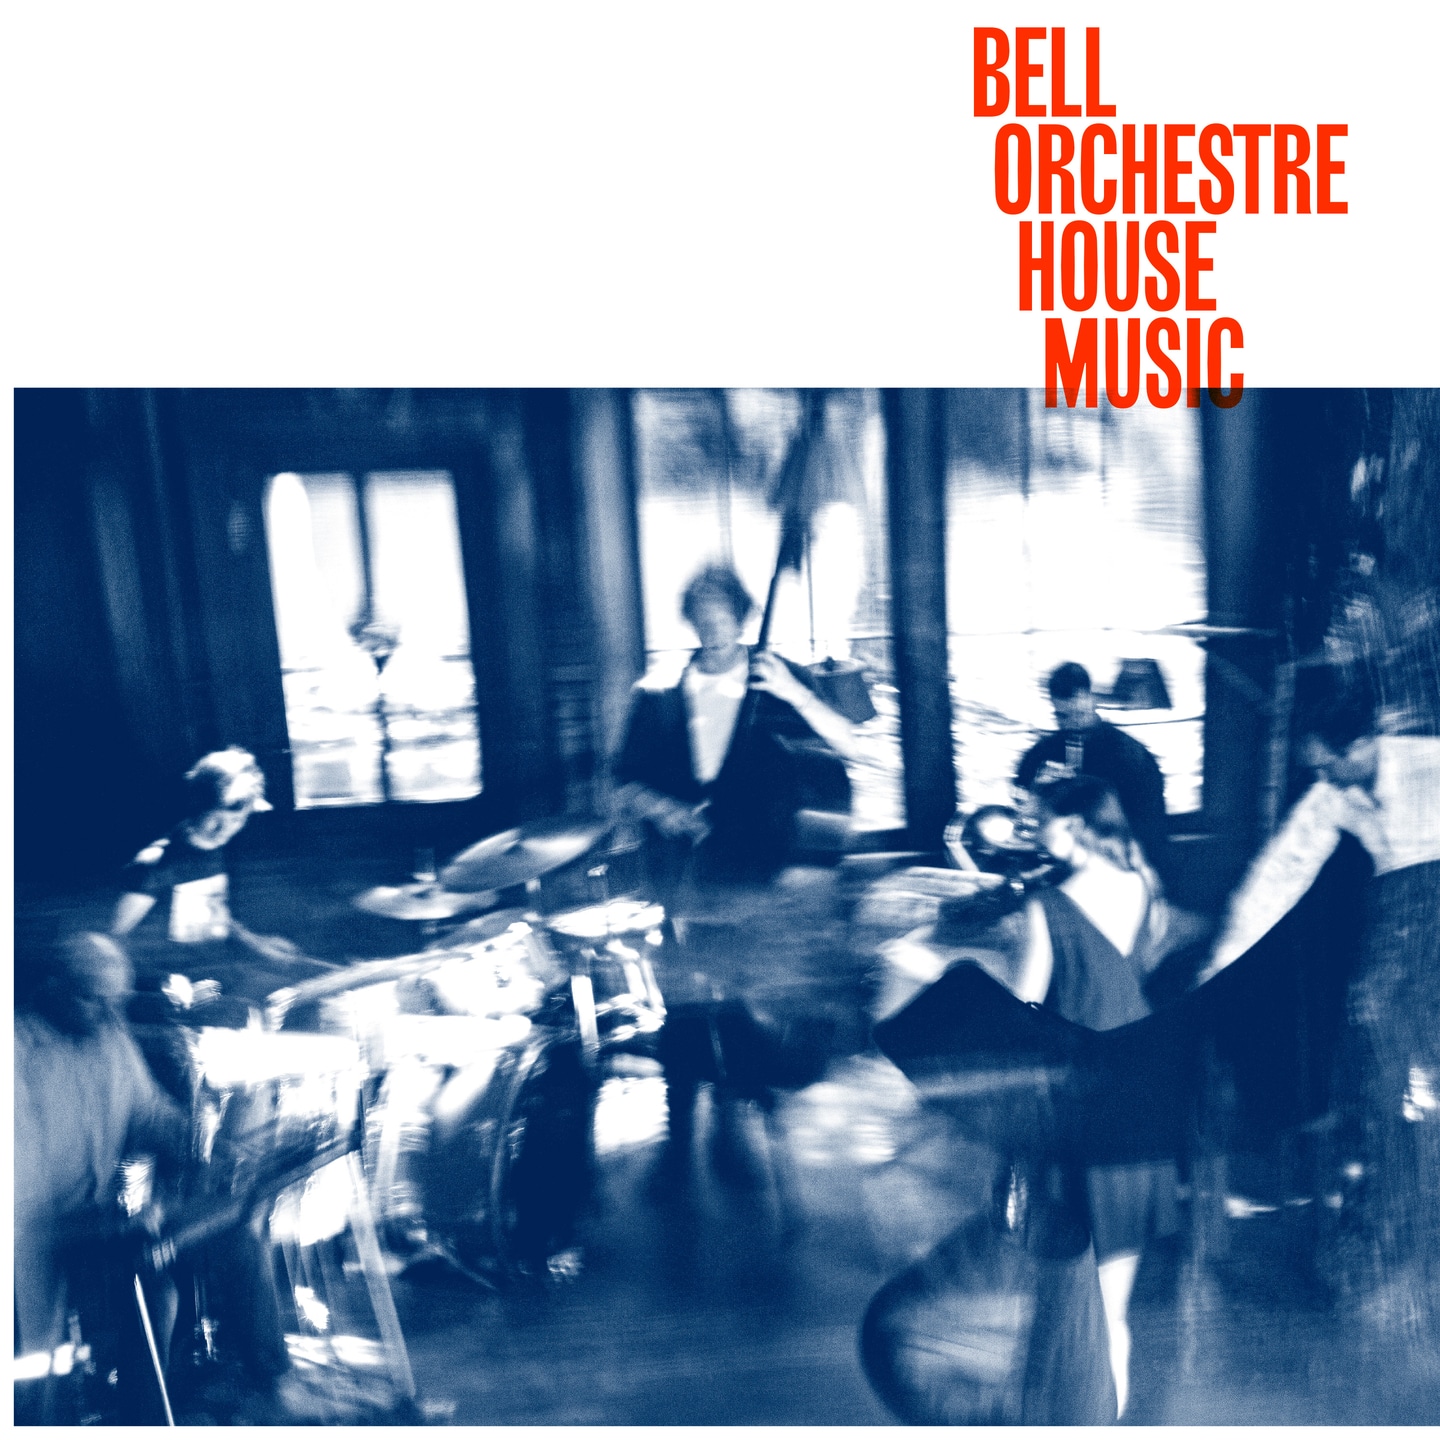 Bell Orchestre - House Music (Ltd clear vinyl) - ERATPLE141 - ERASED TAPES